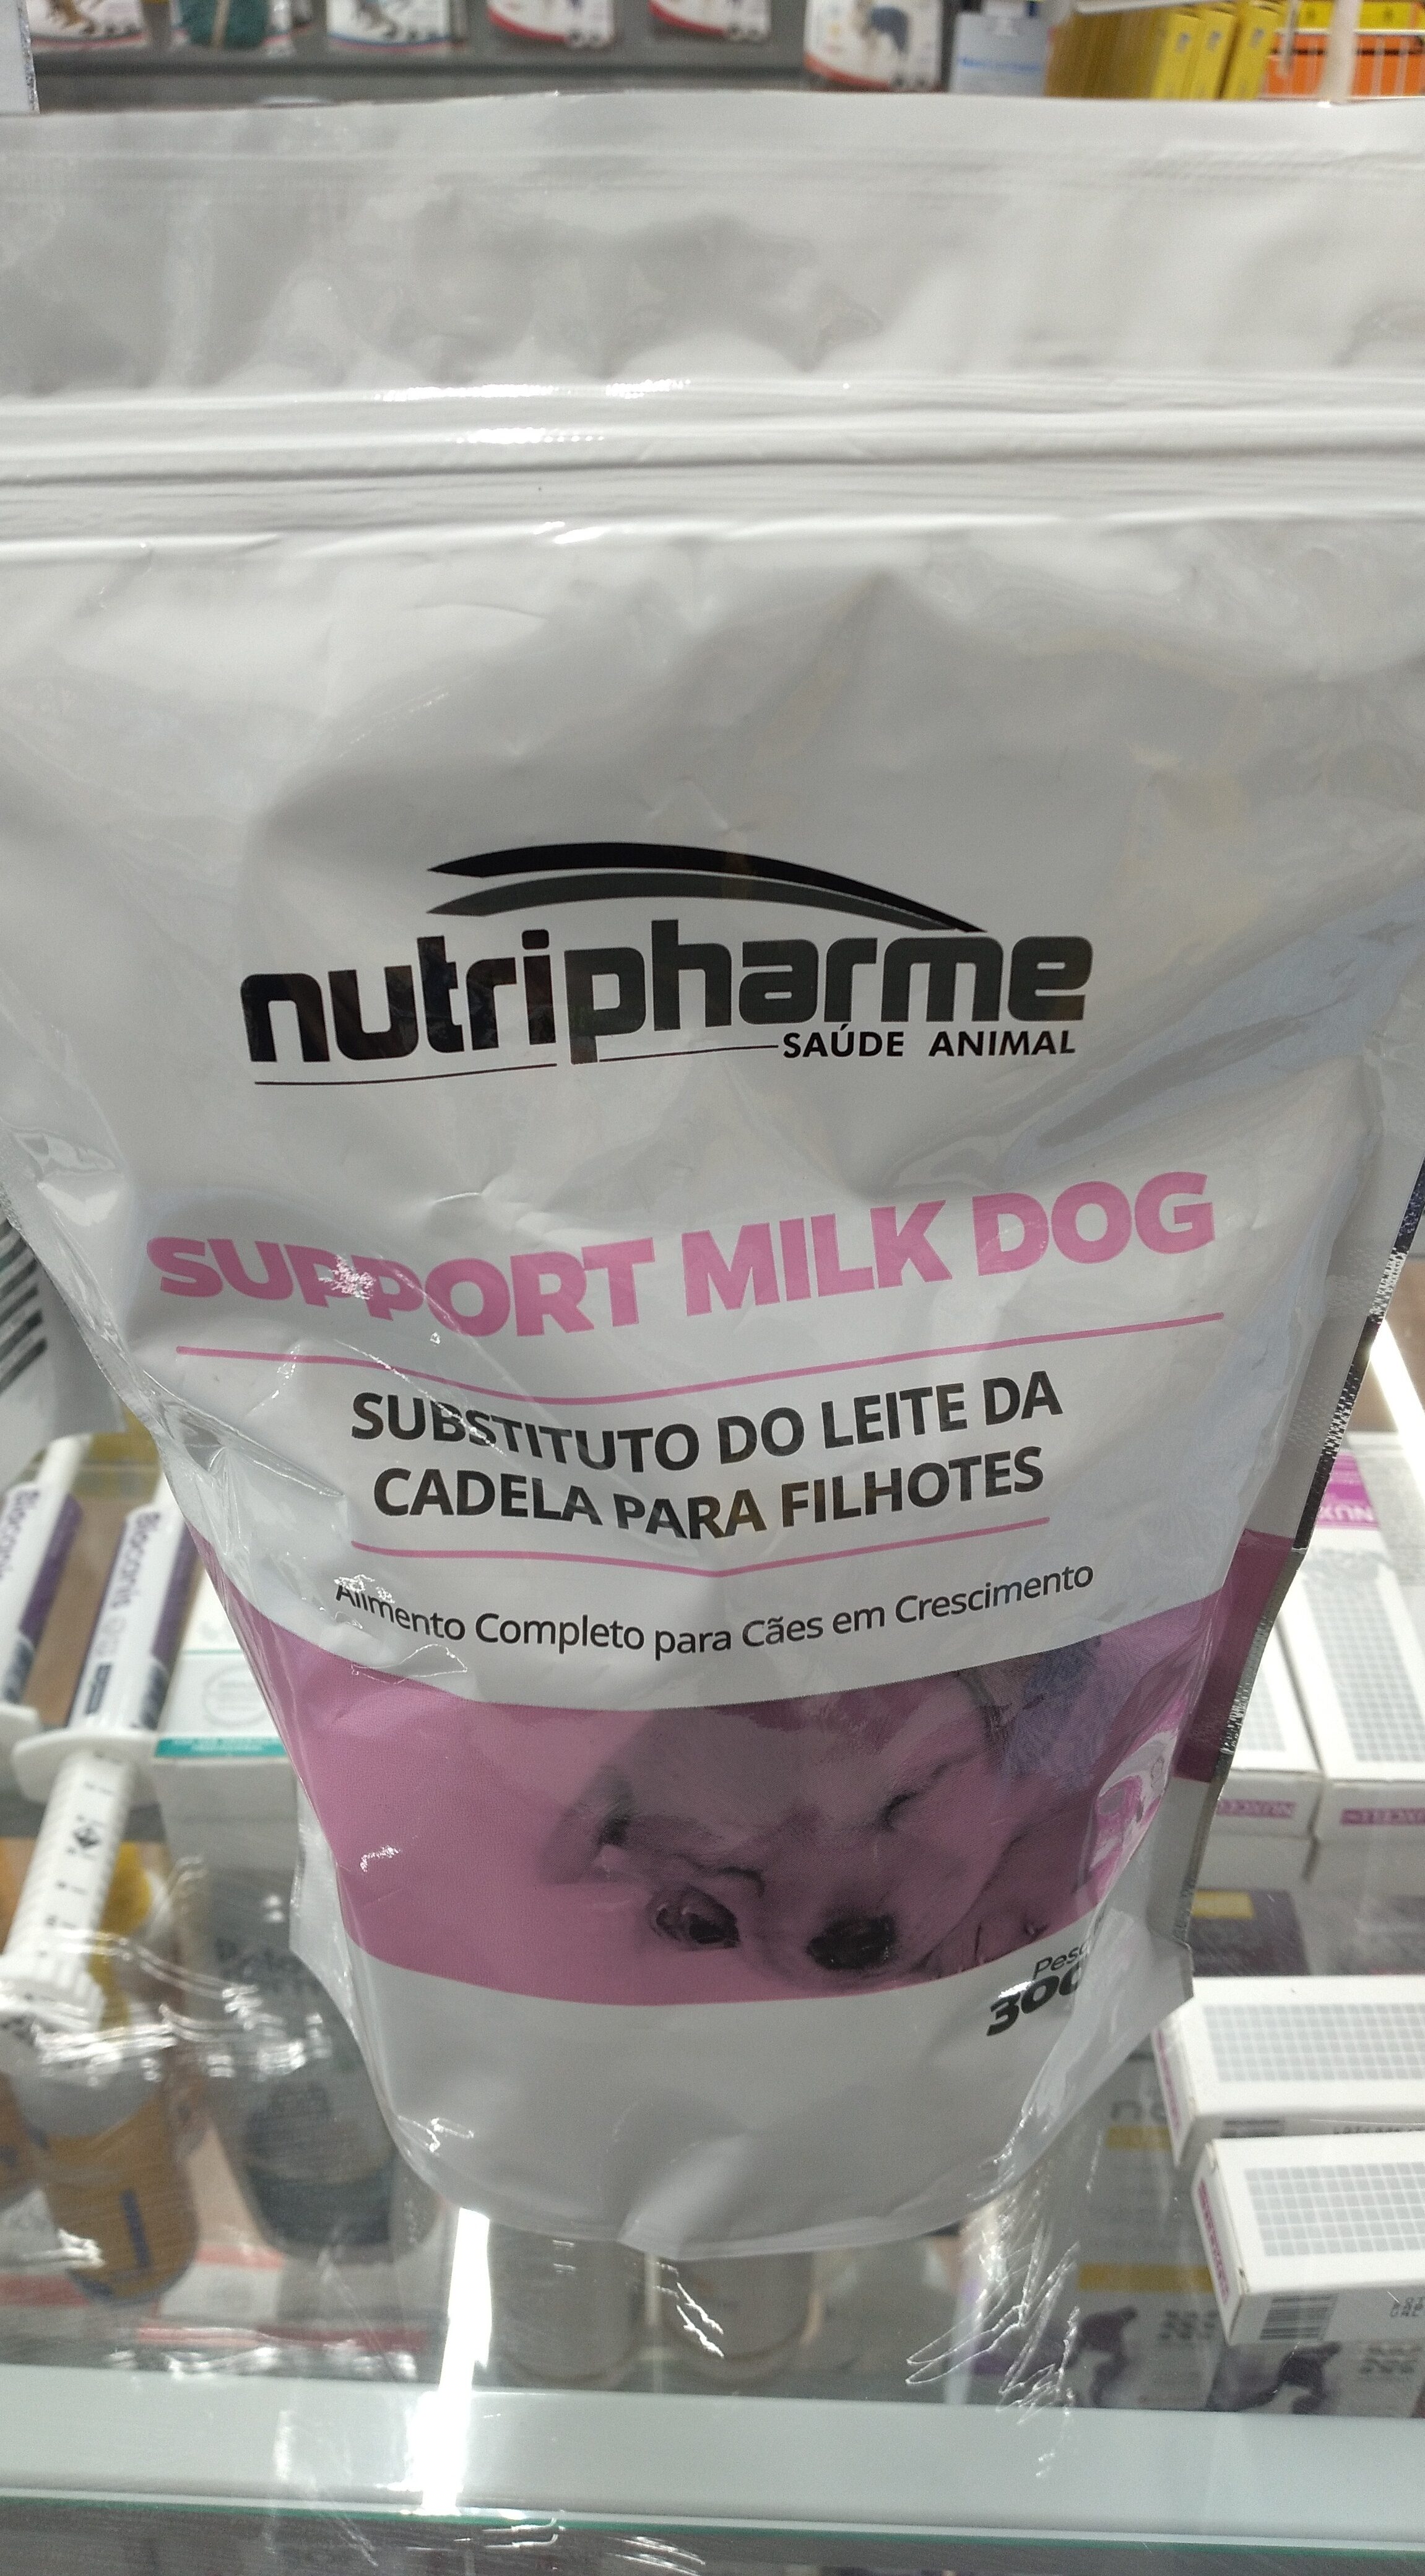 Supl. Support milk dog 300g - Product - pt